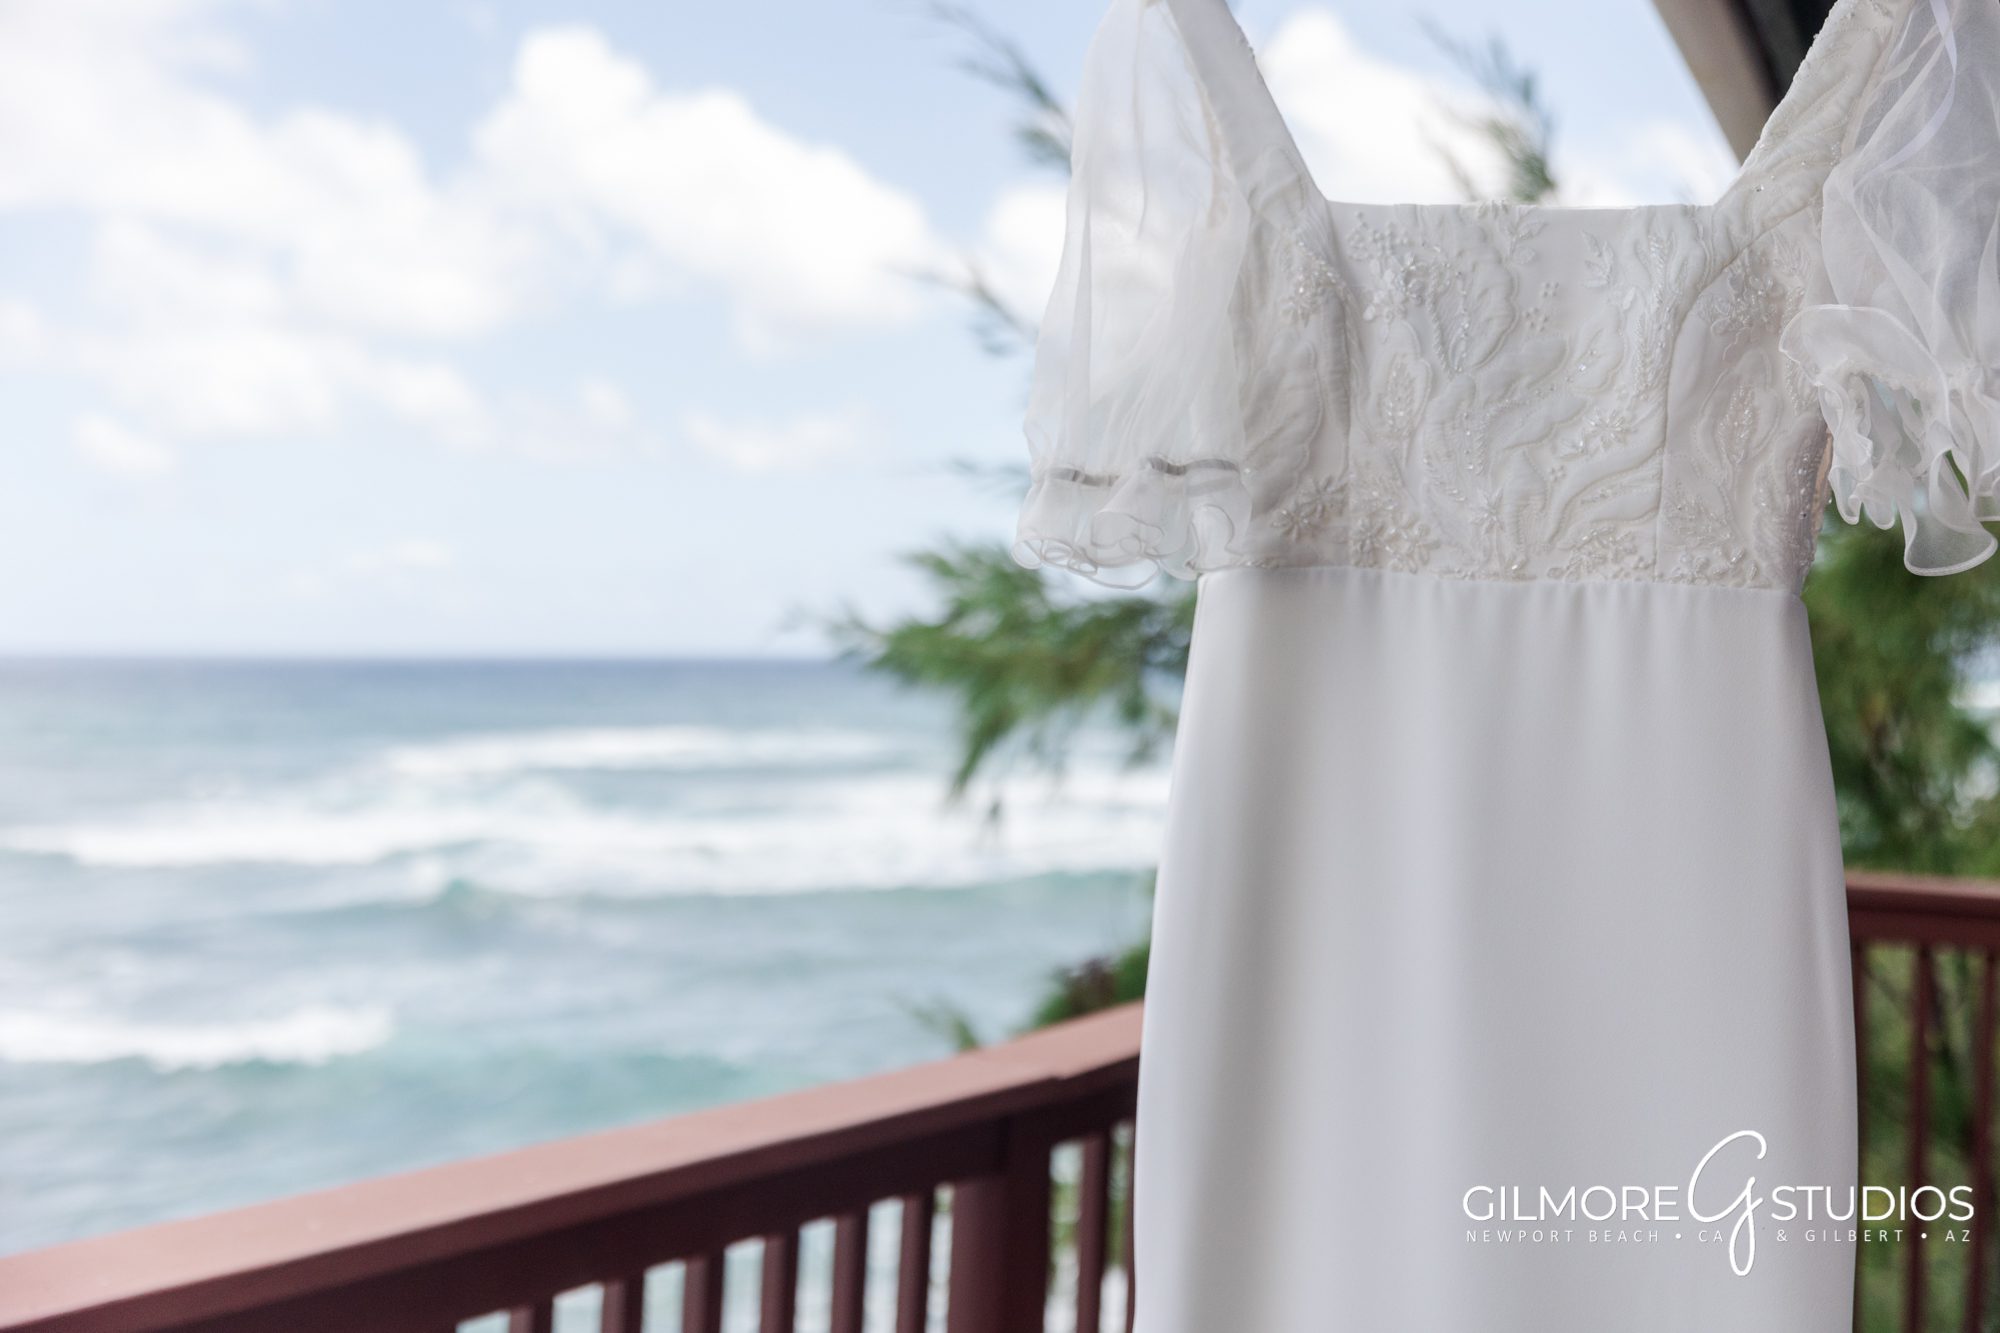 Loulu Palm Wedding Photography, Oahu Weddinga - North Shore - Hawaii - Hawaiian Wedding Venue - Beach Wedding - Aloha Wedding - Gilmore Studios - Wedding dress, Gown, Love and Lace Bridal Salon